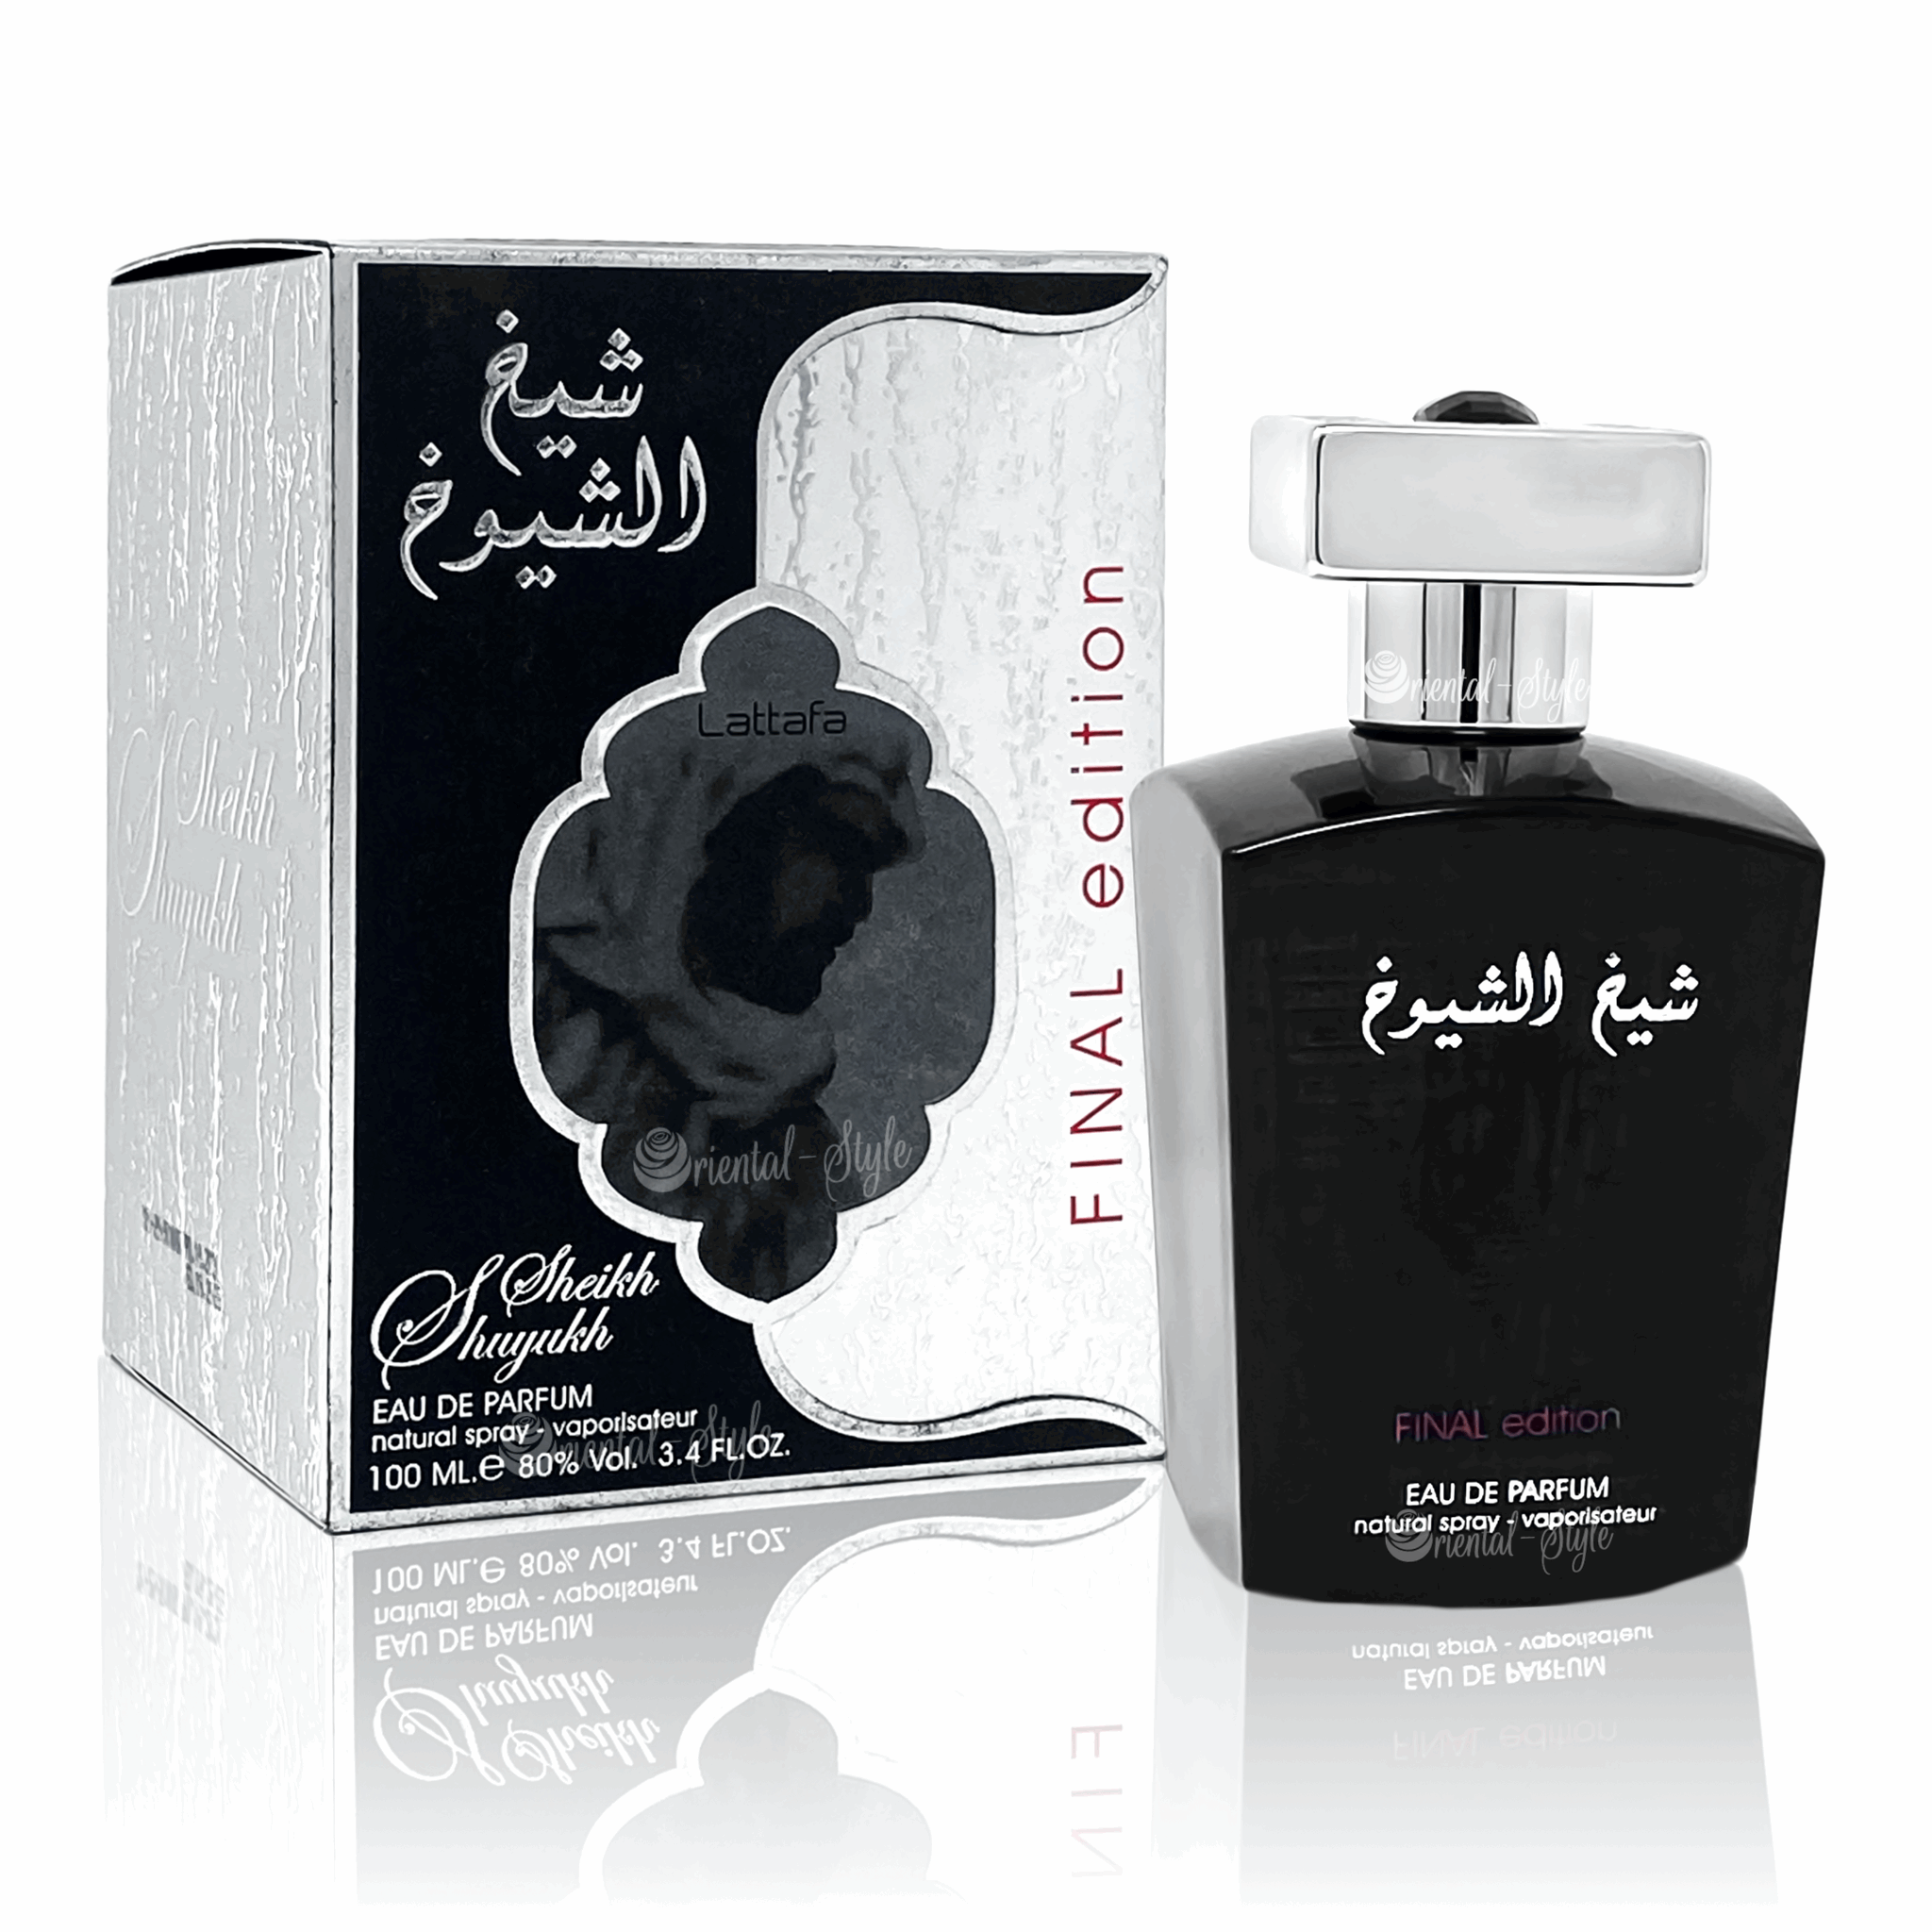 Sheikh Shuyukh Edición Final Lattafa Parfum